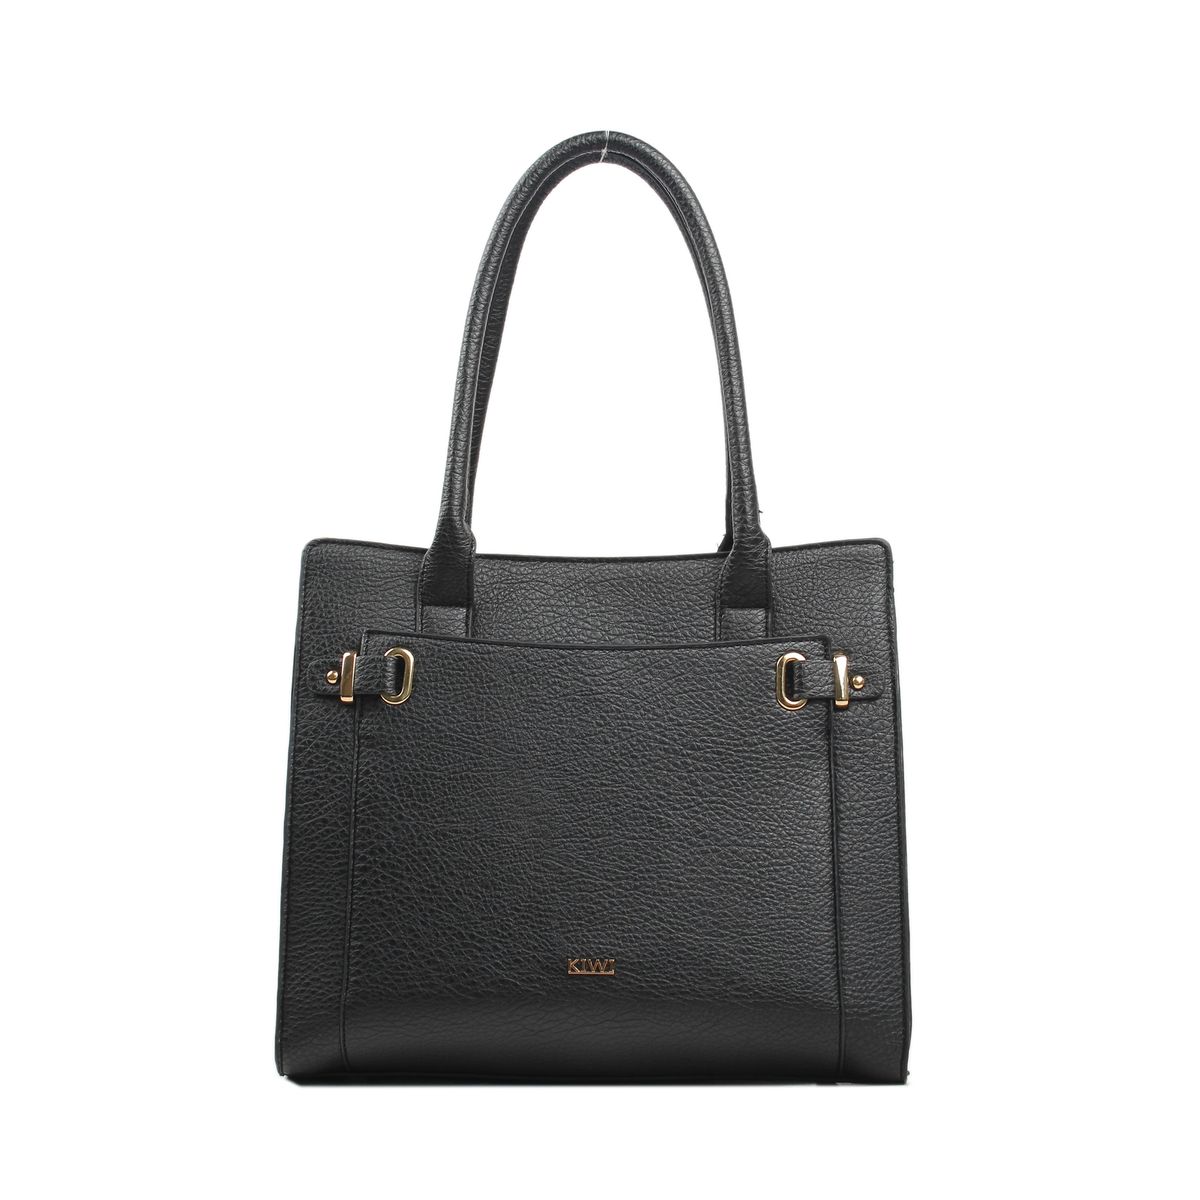 Lastest Model Women's Handbag (PU1135) | Buy Online in South Africa ...